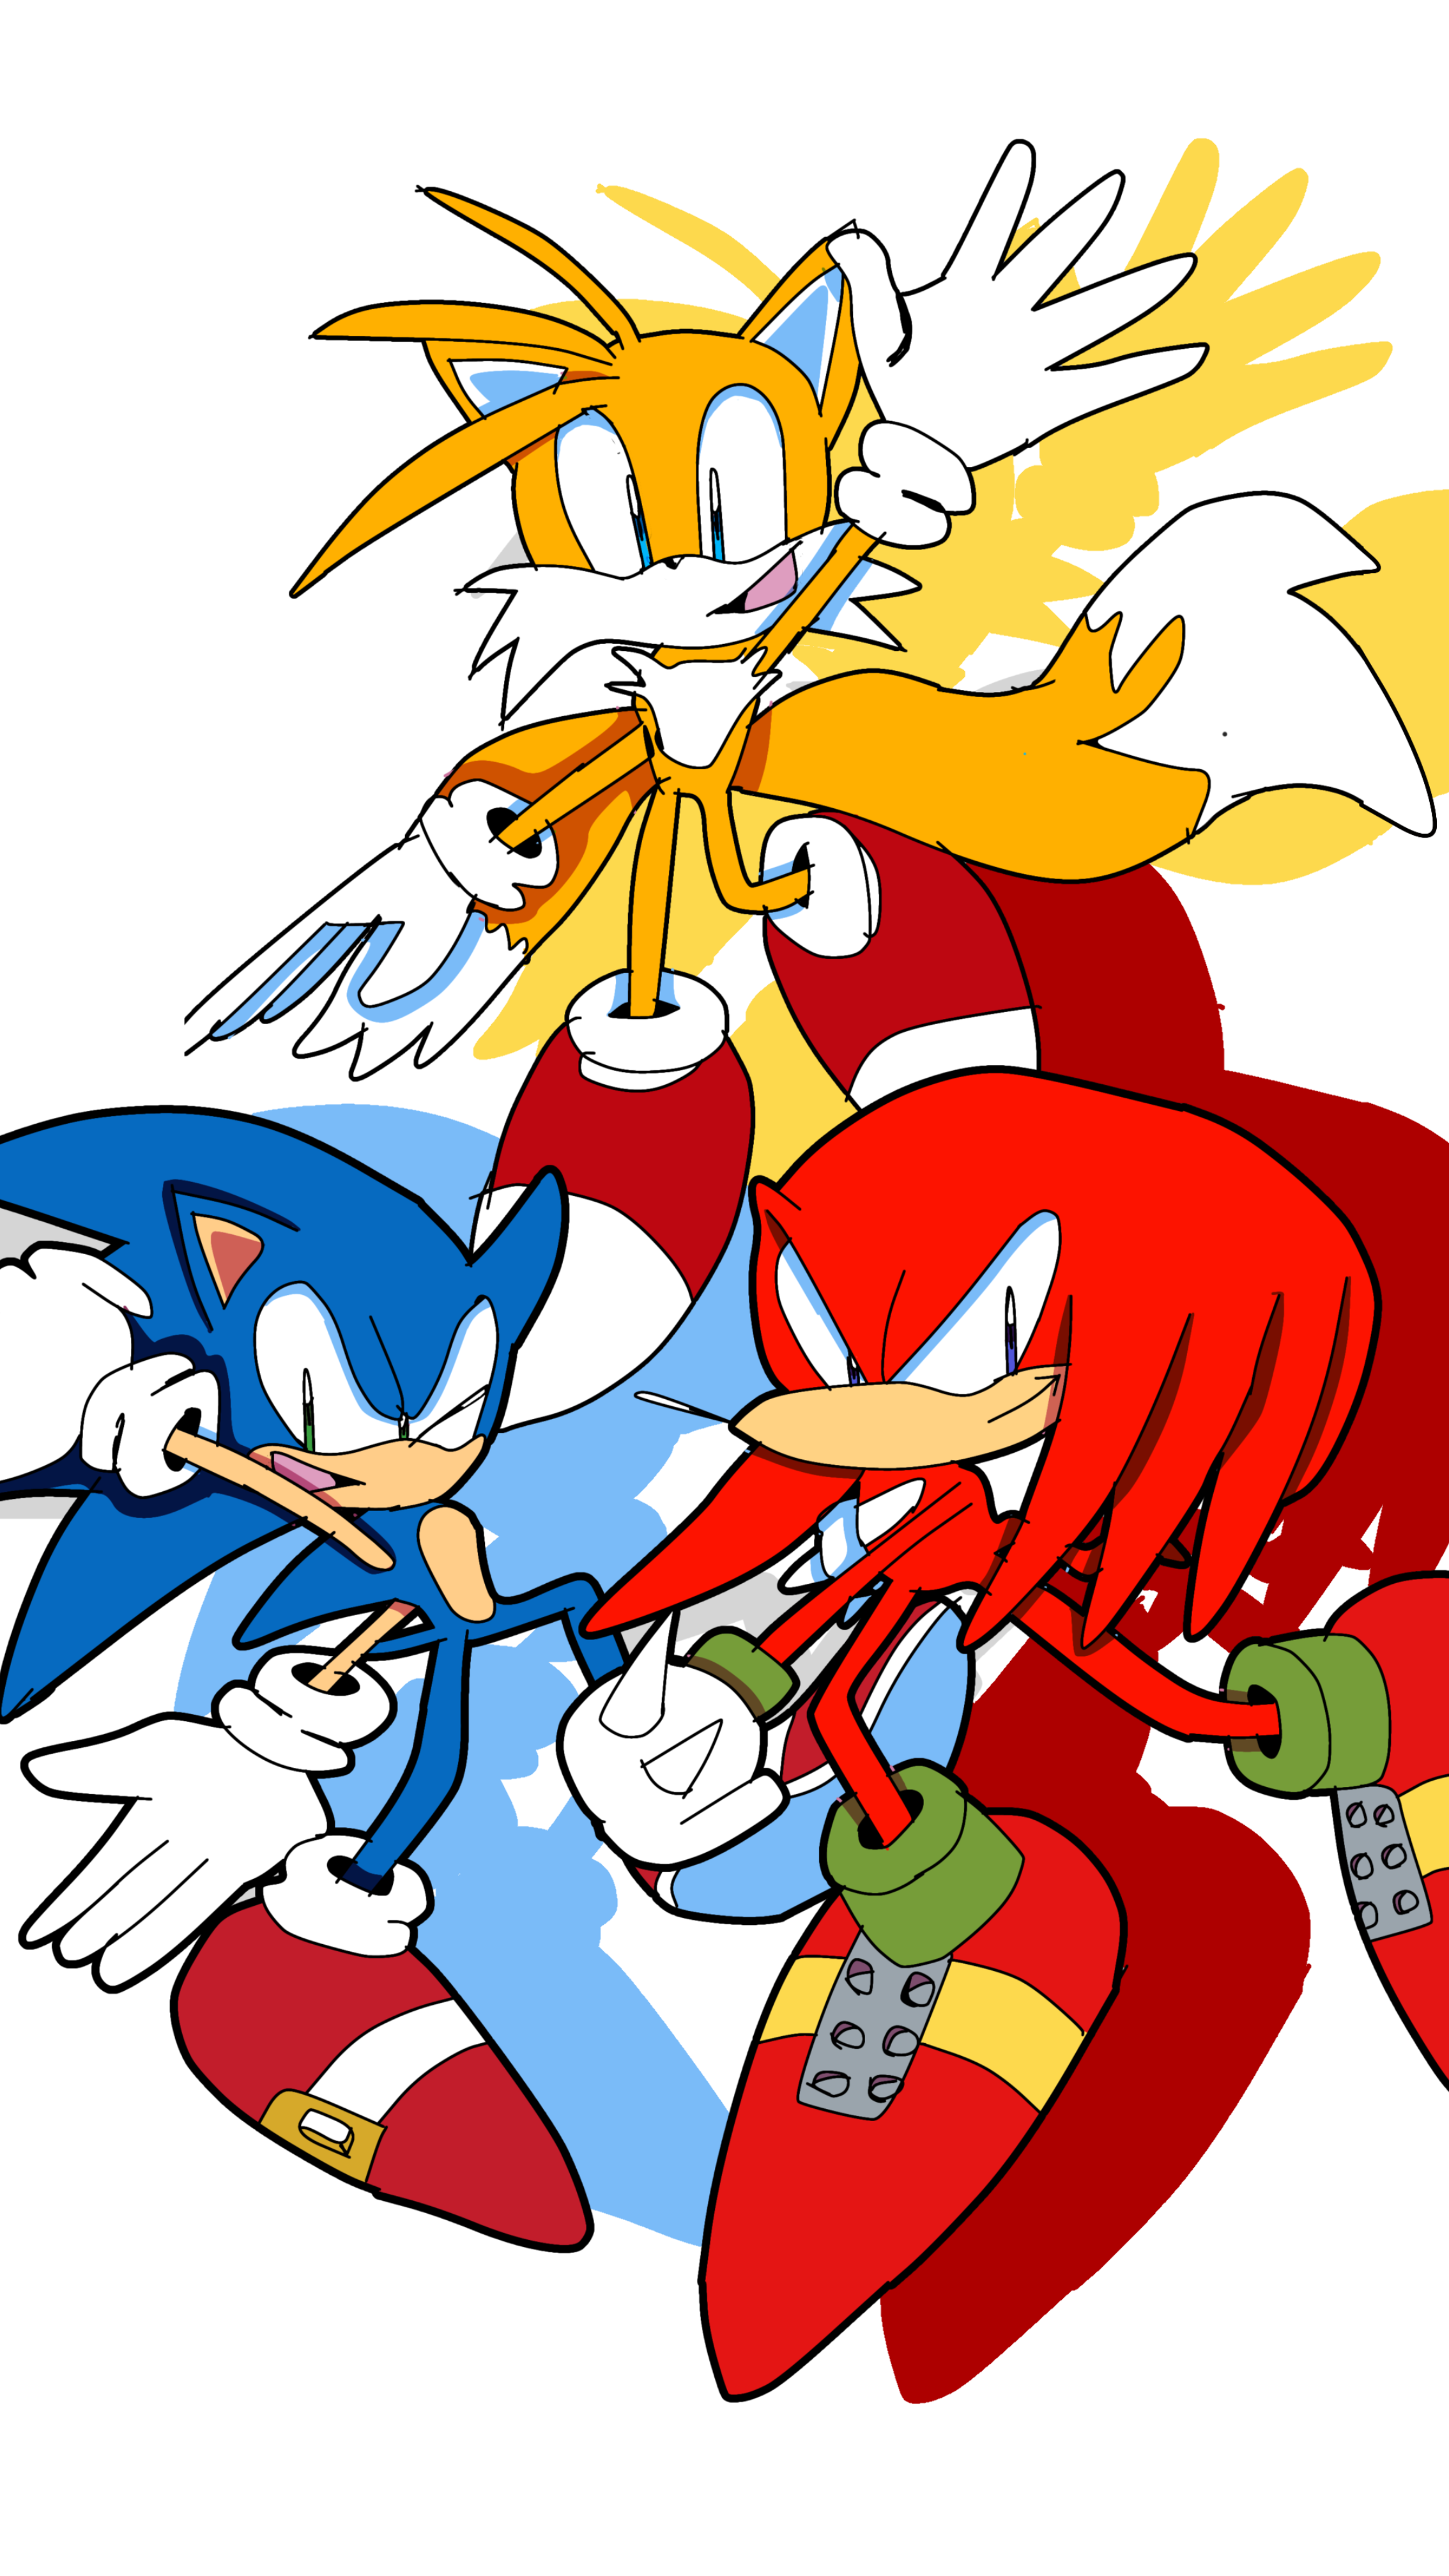 Sonic 3 by newgennitro on DeviantArt